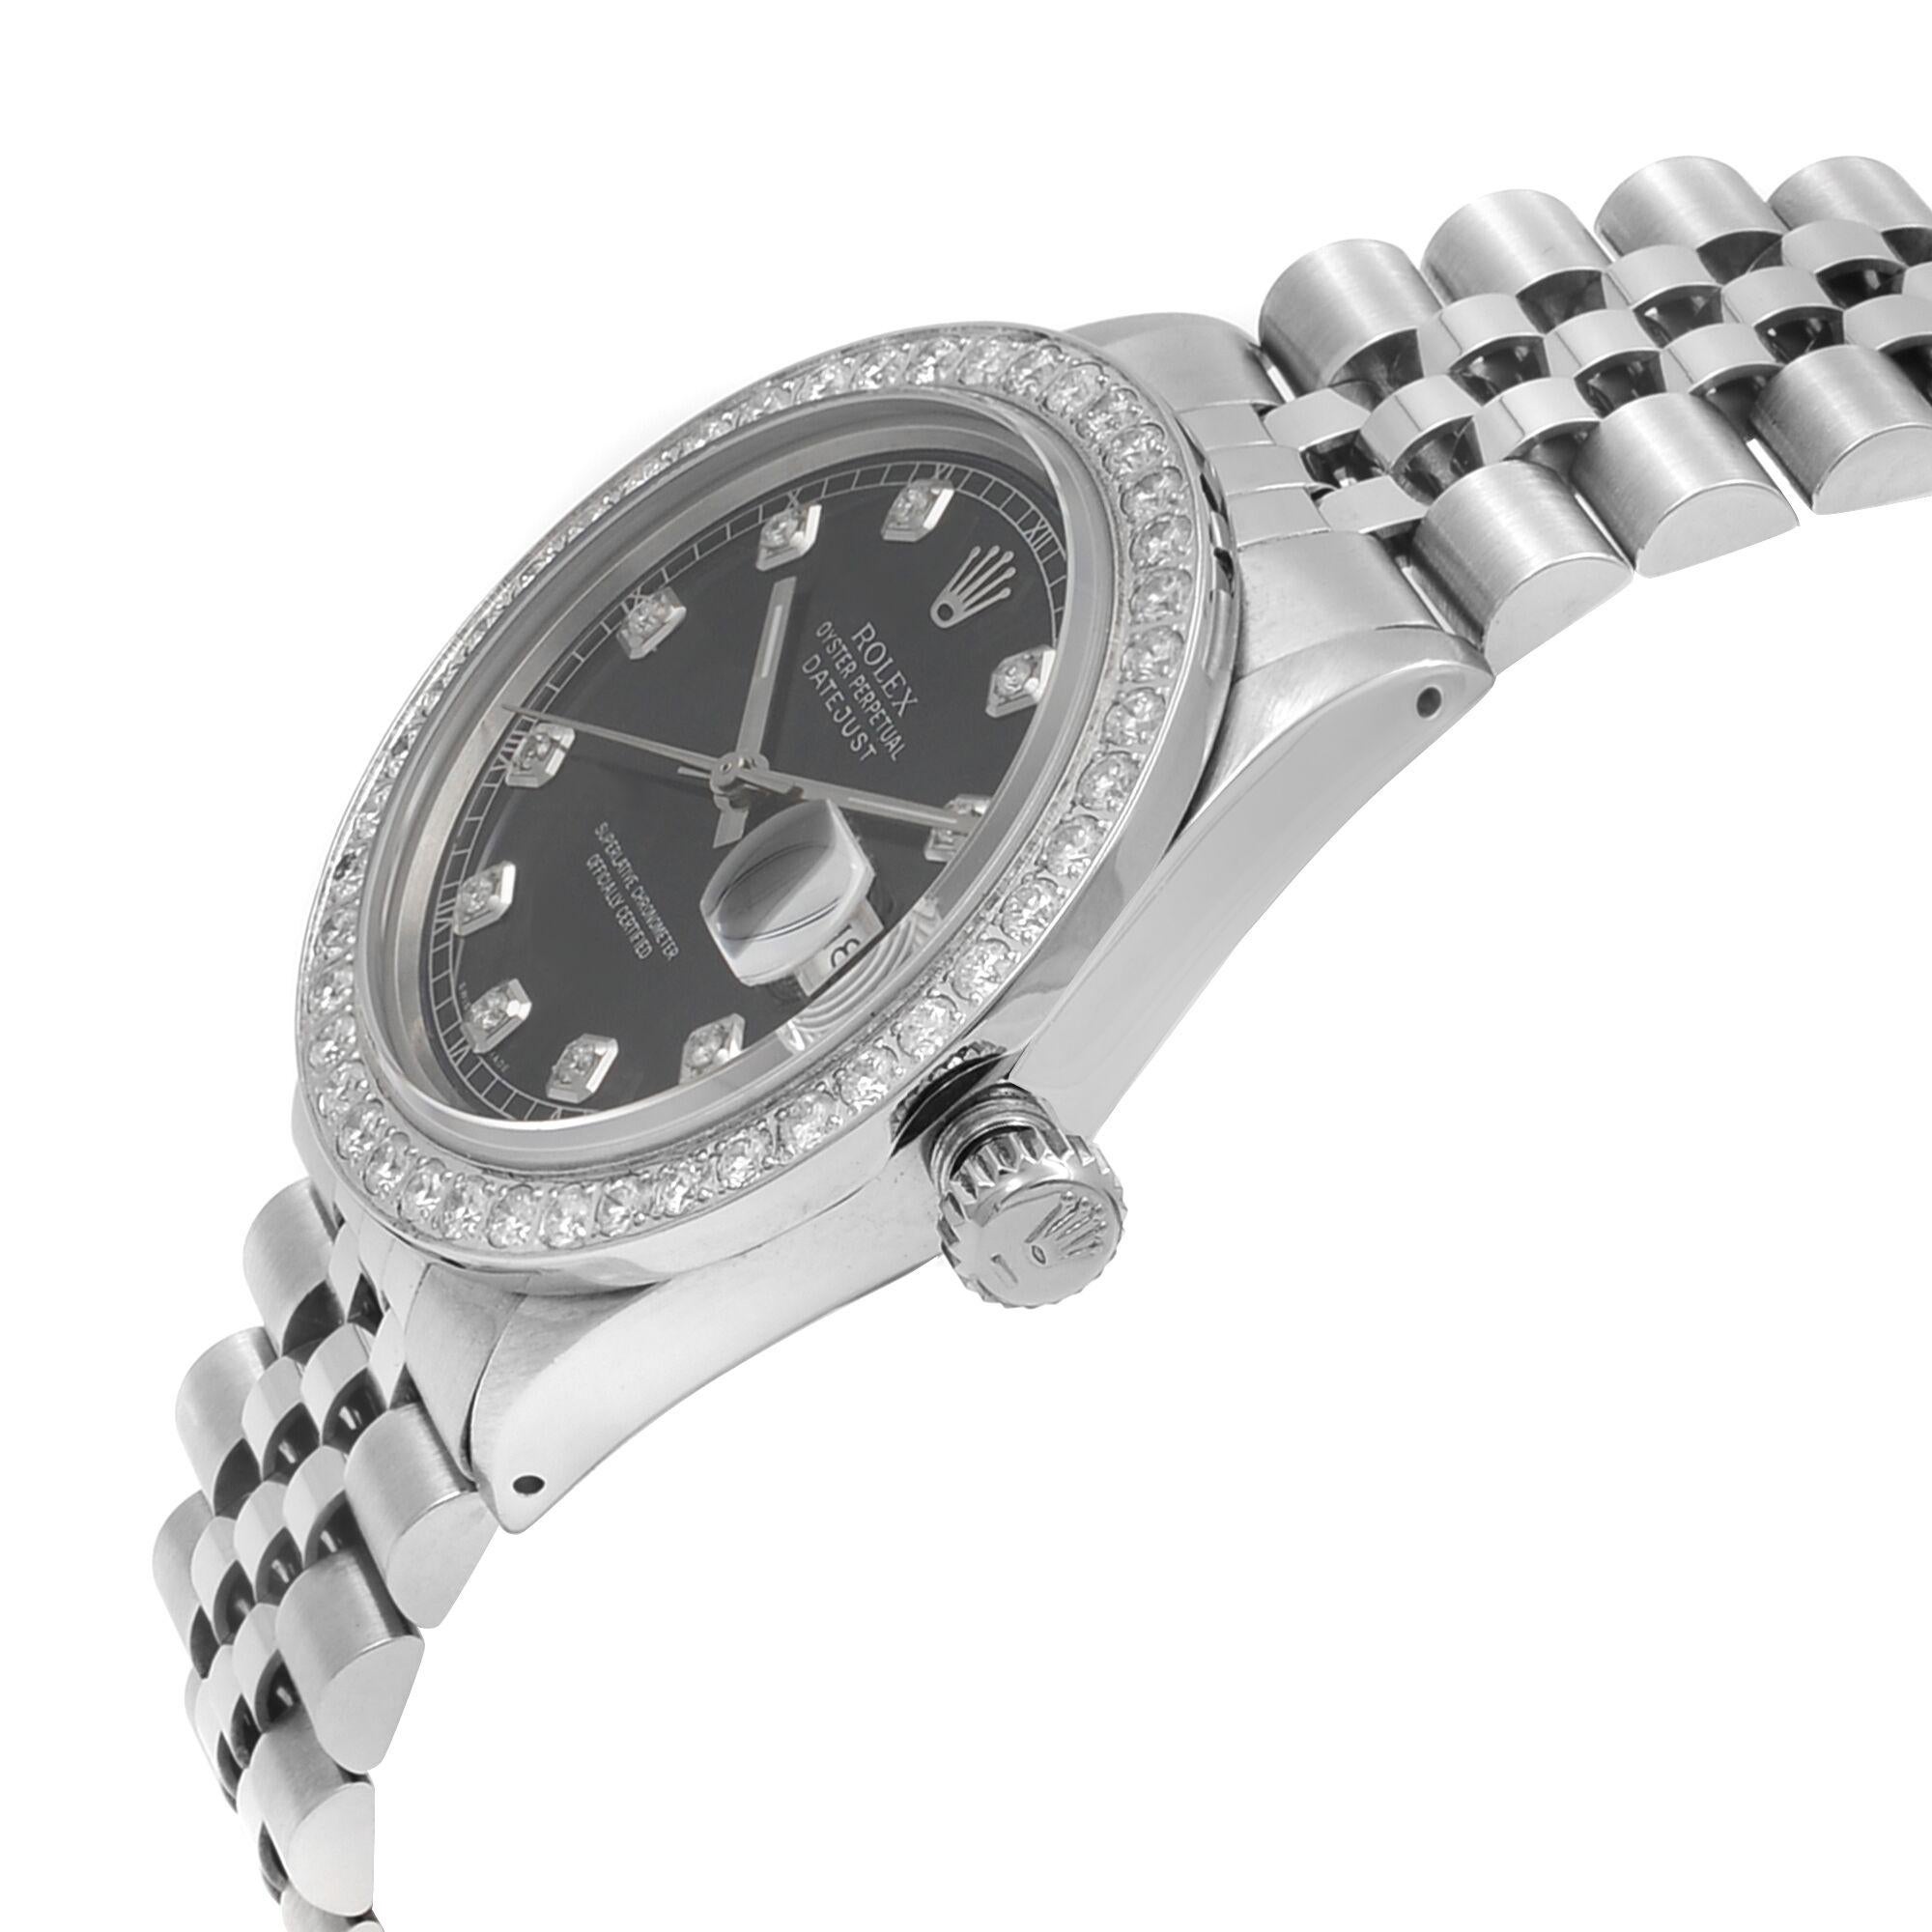 Rolex Datejust 16014 Custom Diamonds Aprrox 1.5 Ct Steel Automatic Men's Watch 1